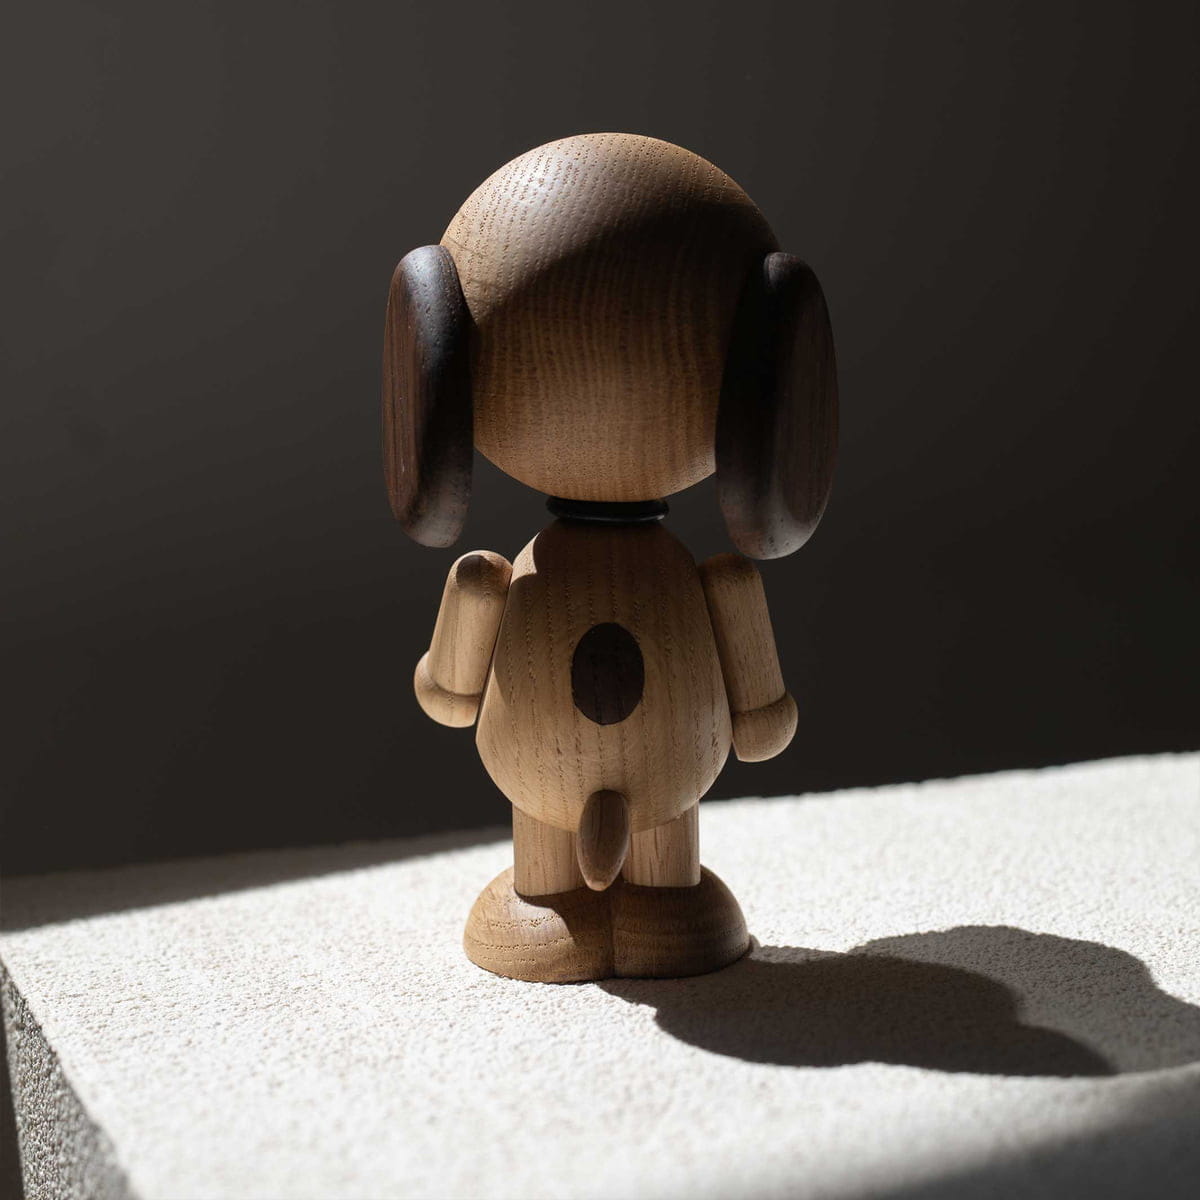 Kindheit Snoopy Peanuts ™ ️ Holzfigur Eiche, klein